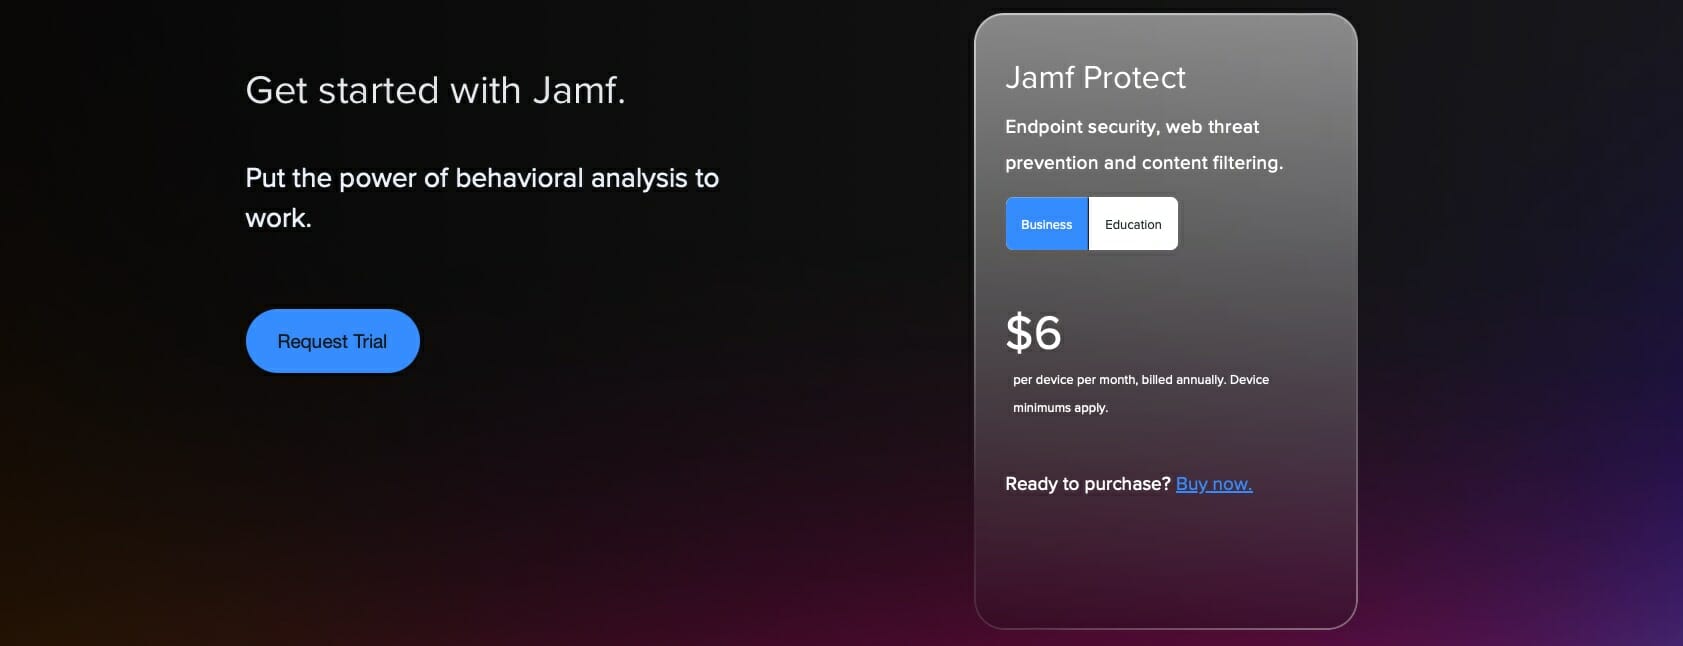 Jamf Protect Pricing